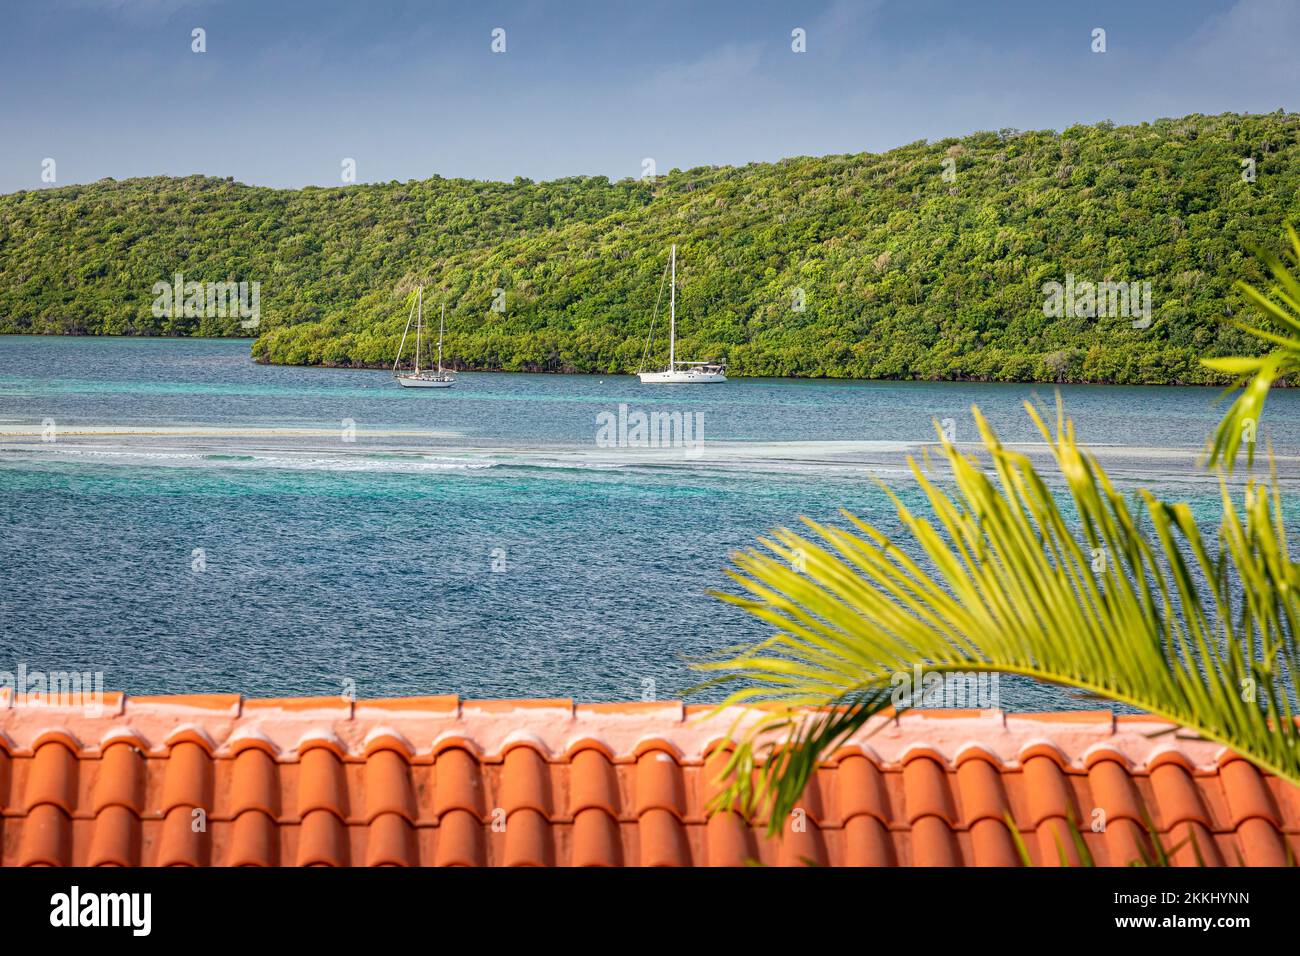 Boats dock in Mosquito Bayon the tropical Caribbean island of Culebra, Puerto Rico, USA. Stock Photo